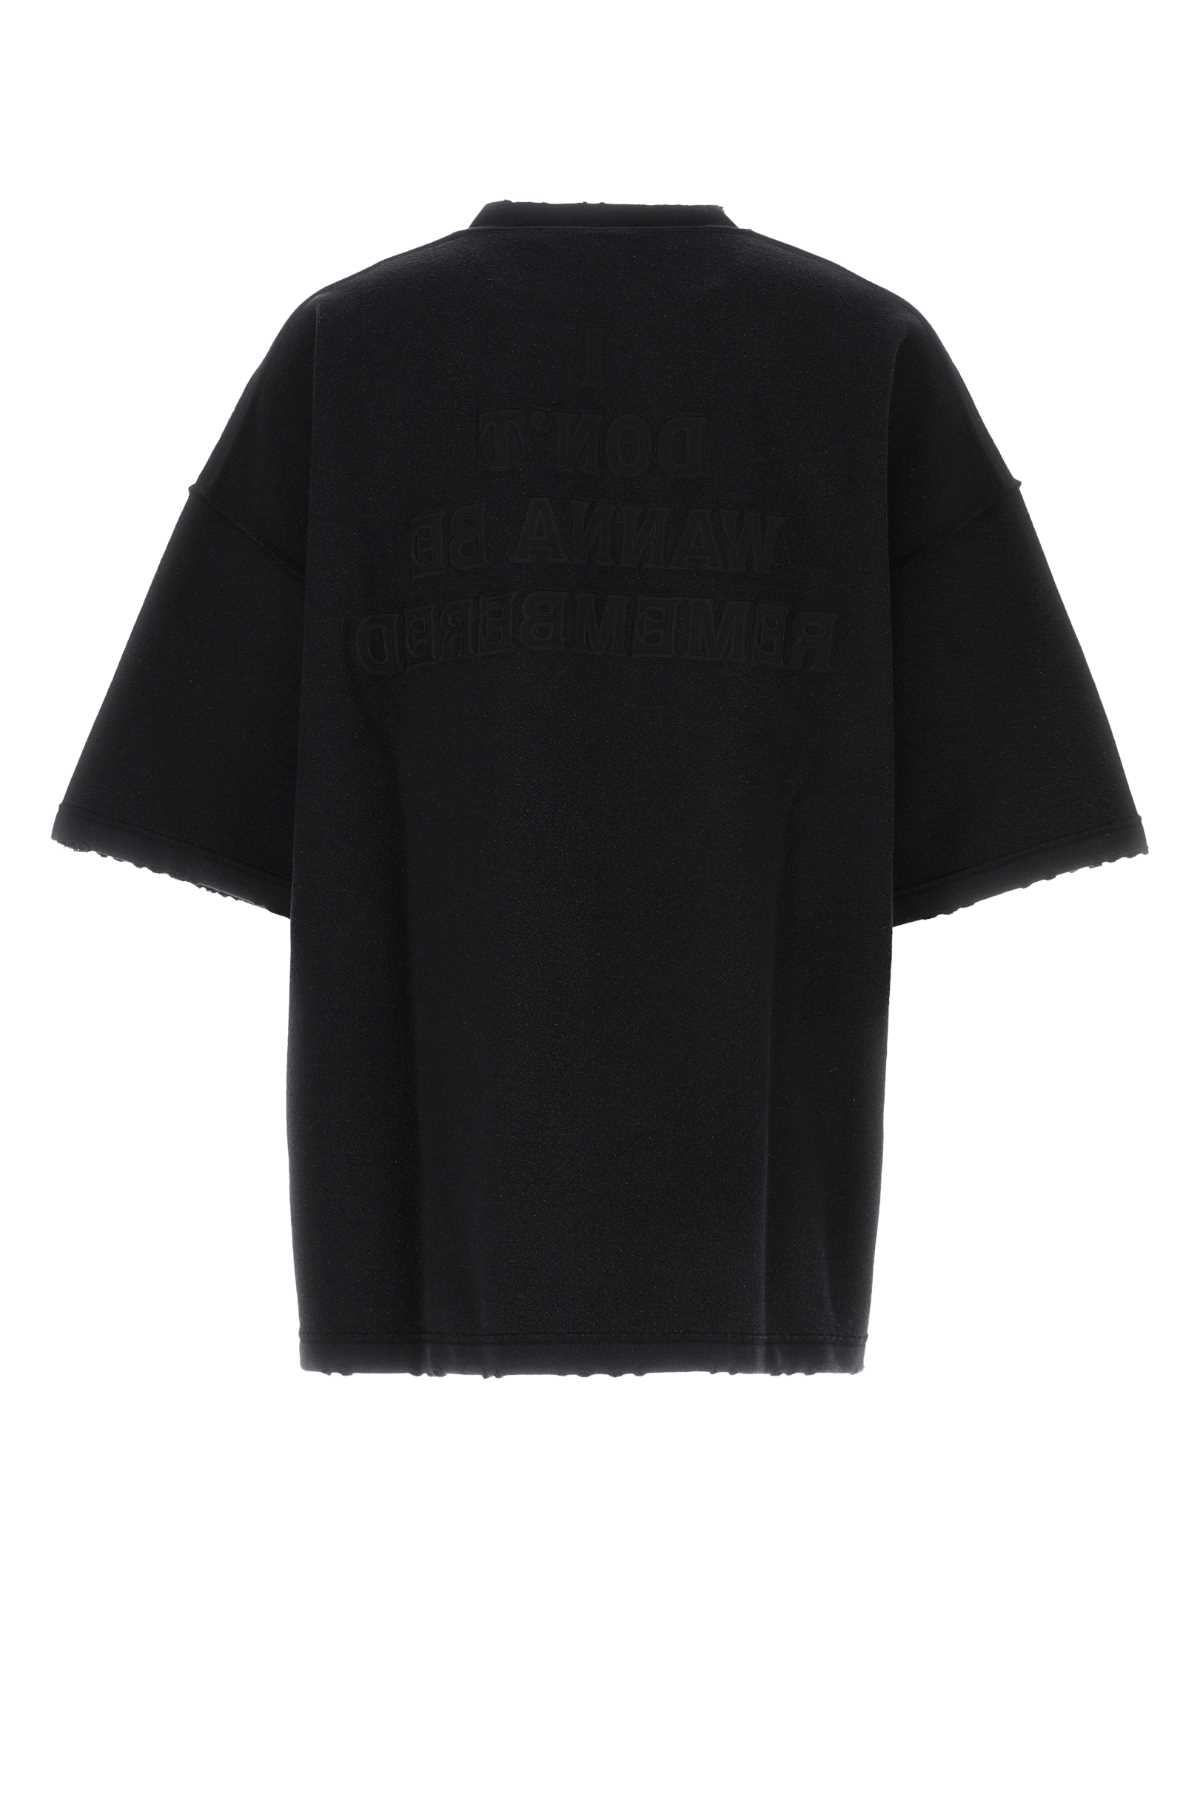 Vetements Black Cotton Blend Oversize T-shirt In Dirtyblack